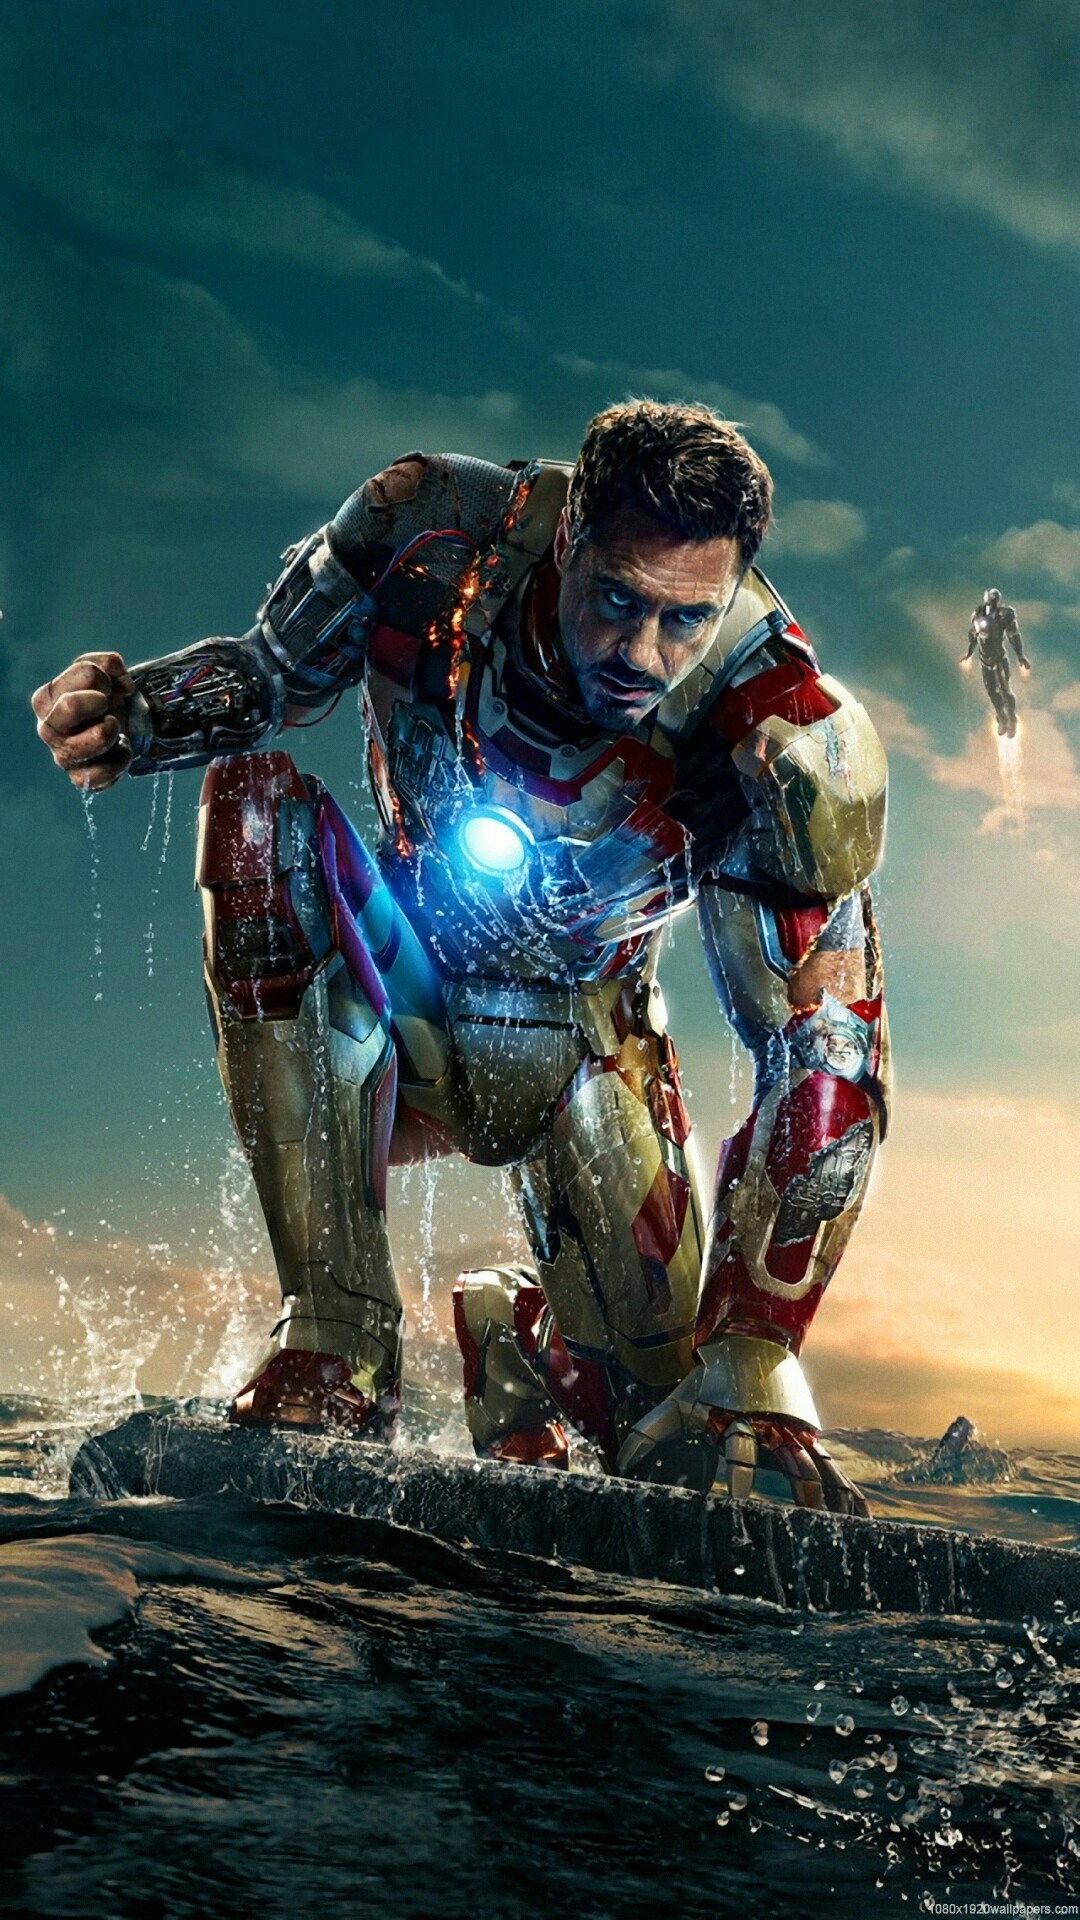 1080x1920 Iron man wallpaper